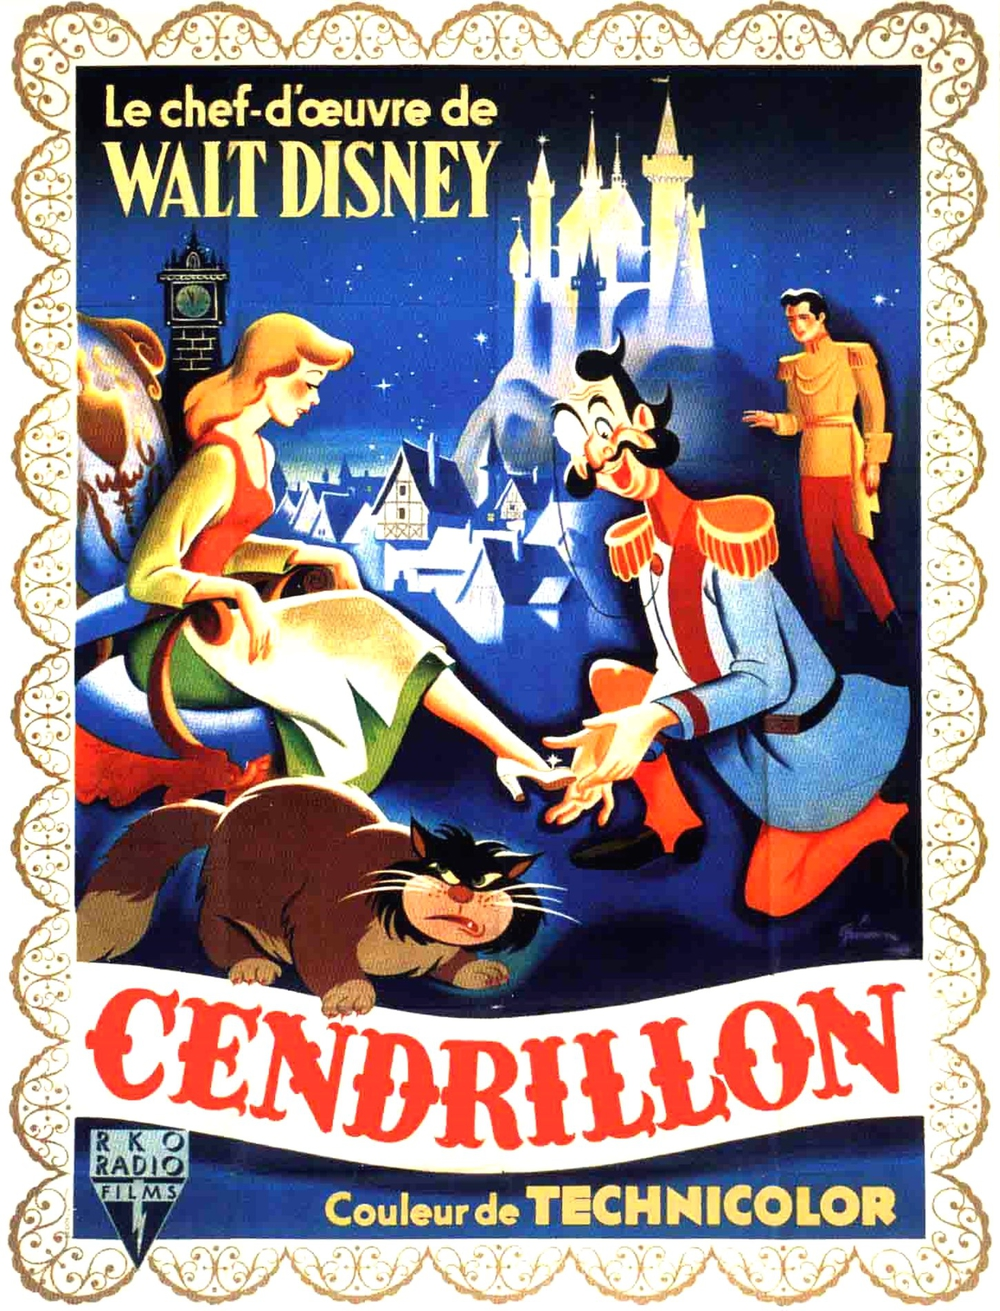 Comment S Appelle Le Prince De Cendrillon Cendrillon | Wiki Once Upon a Time | Fandom